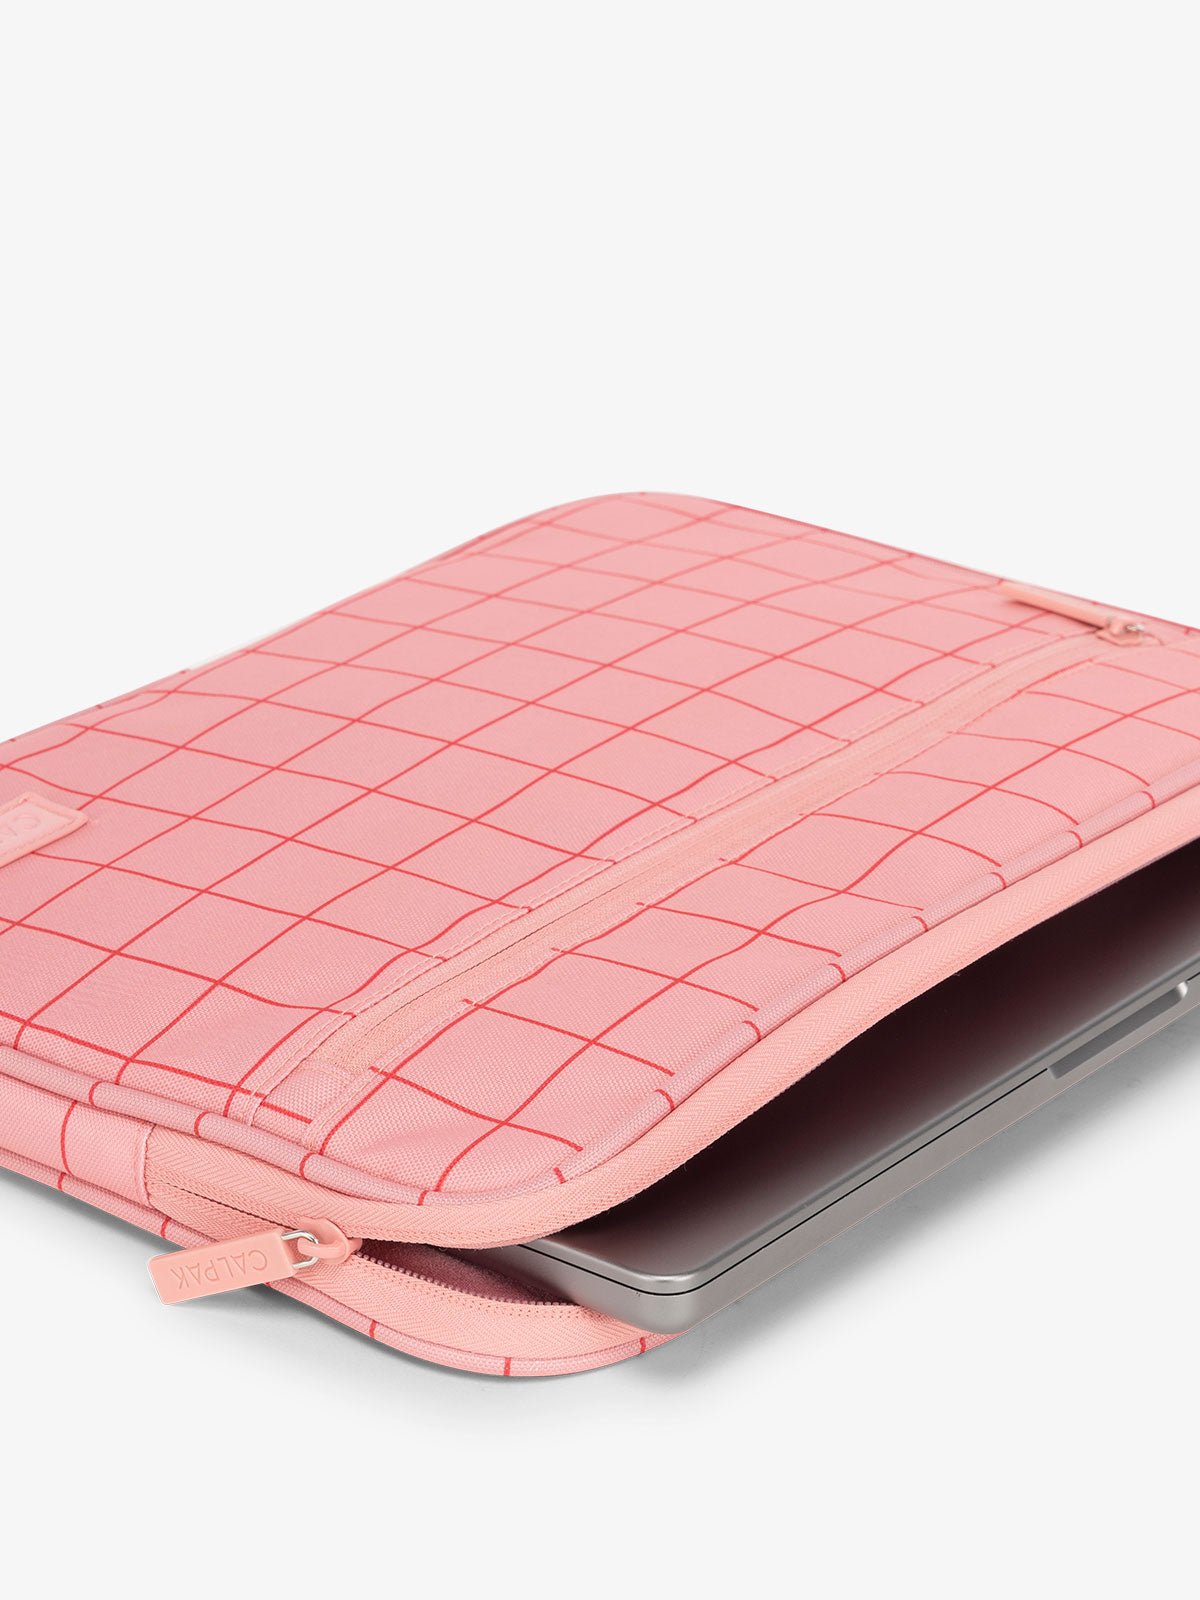 CALPAK 15-17 Inch Padded Laptop case water resistant in pink grid